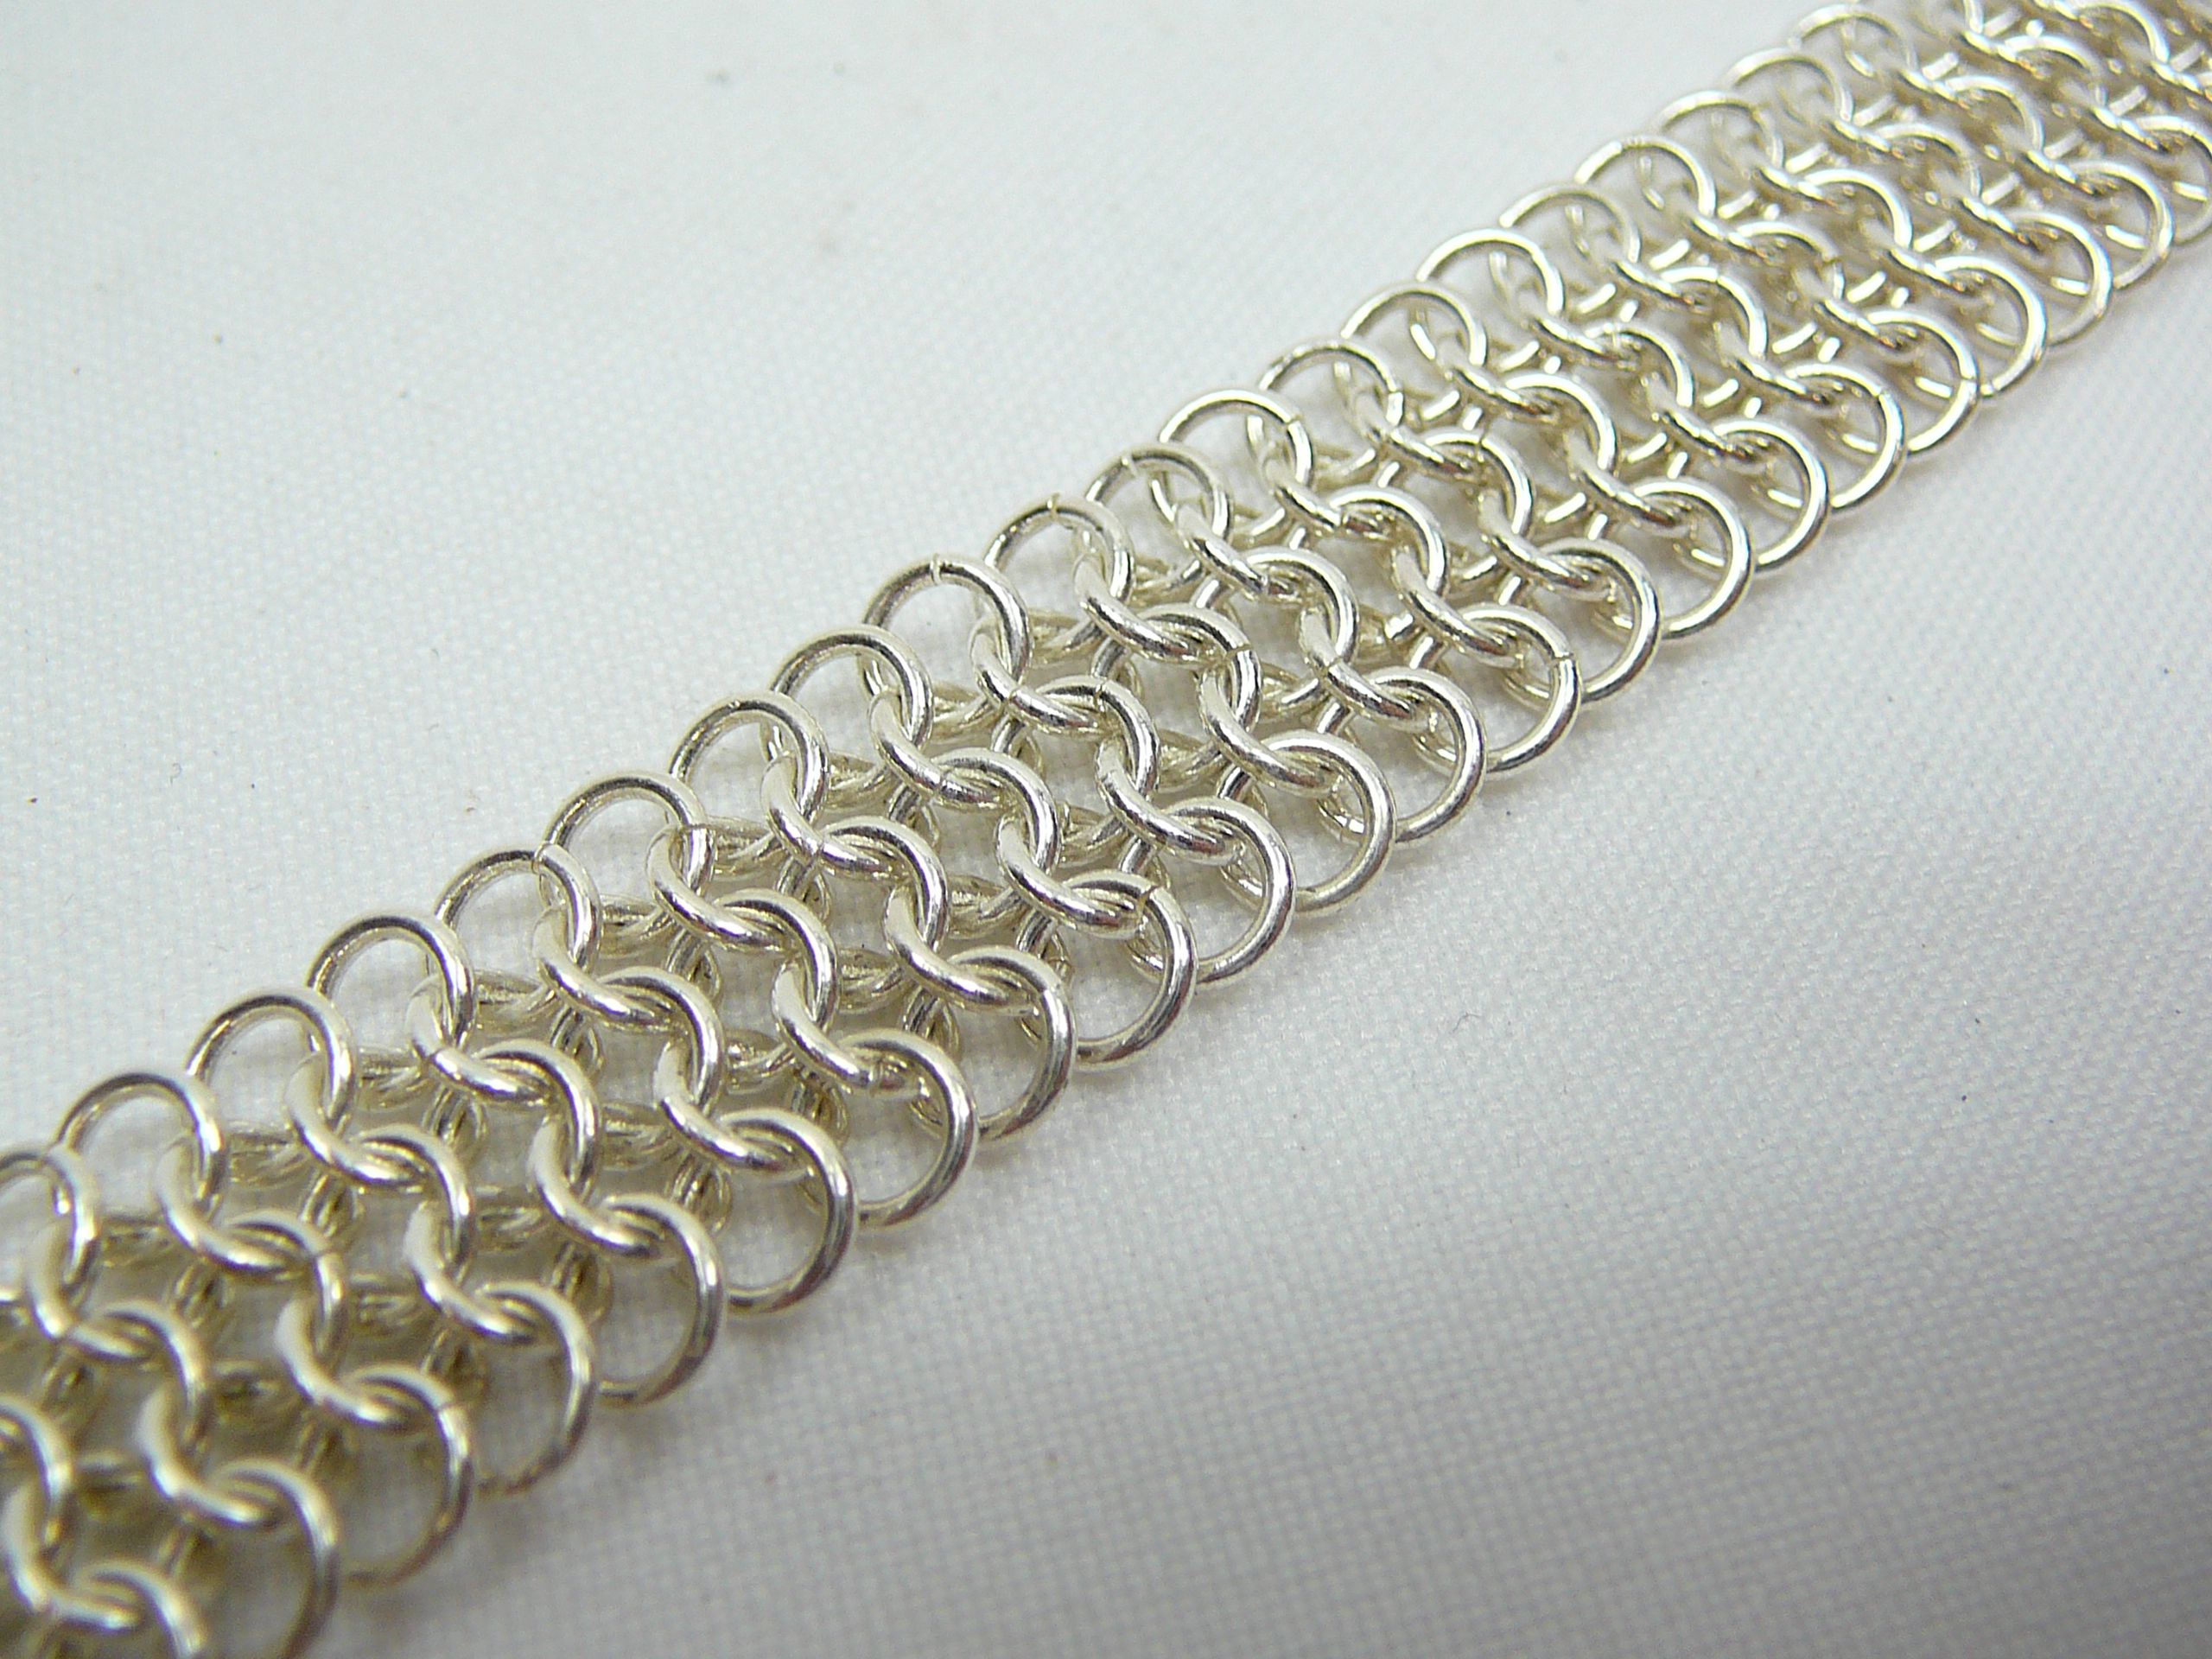 Silver chain mesh bracelet. - Image 2 of 3